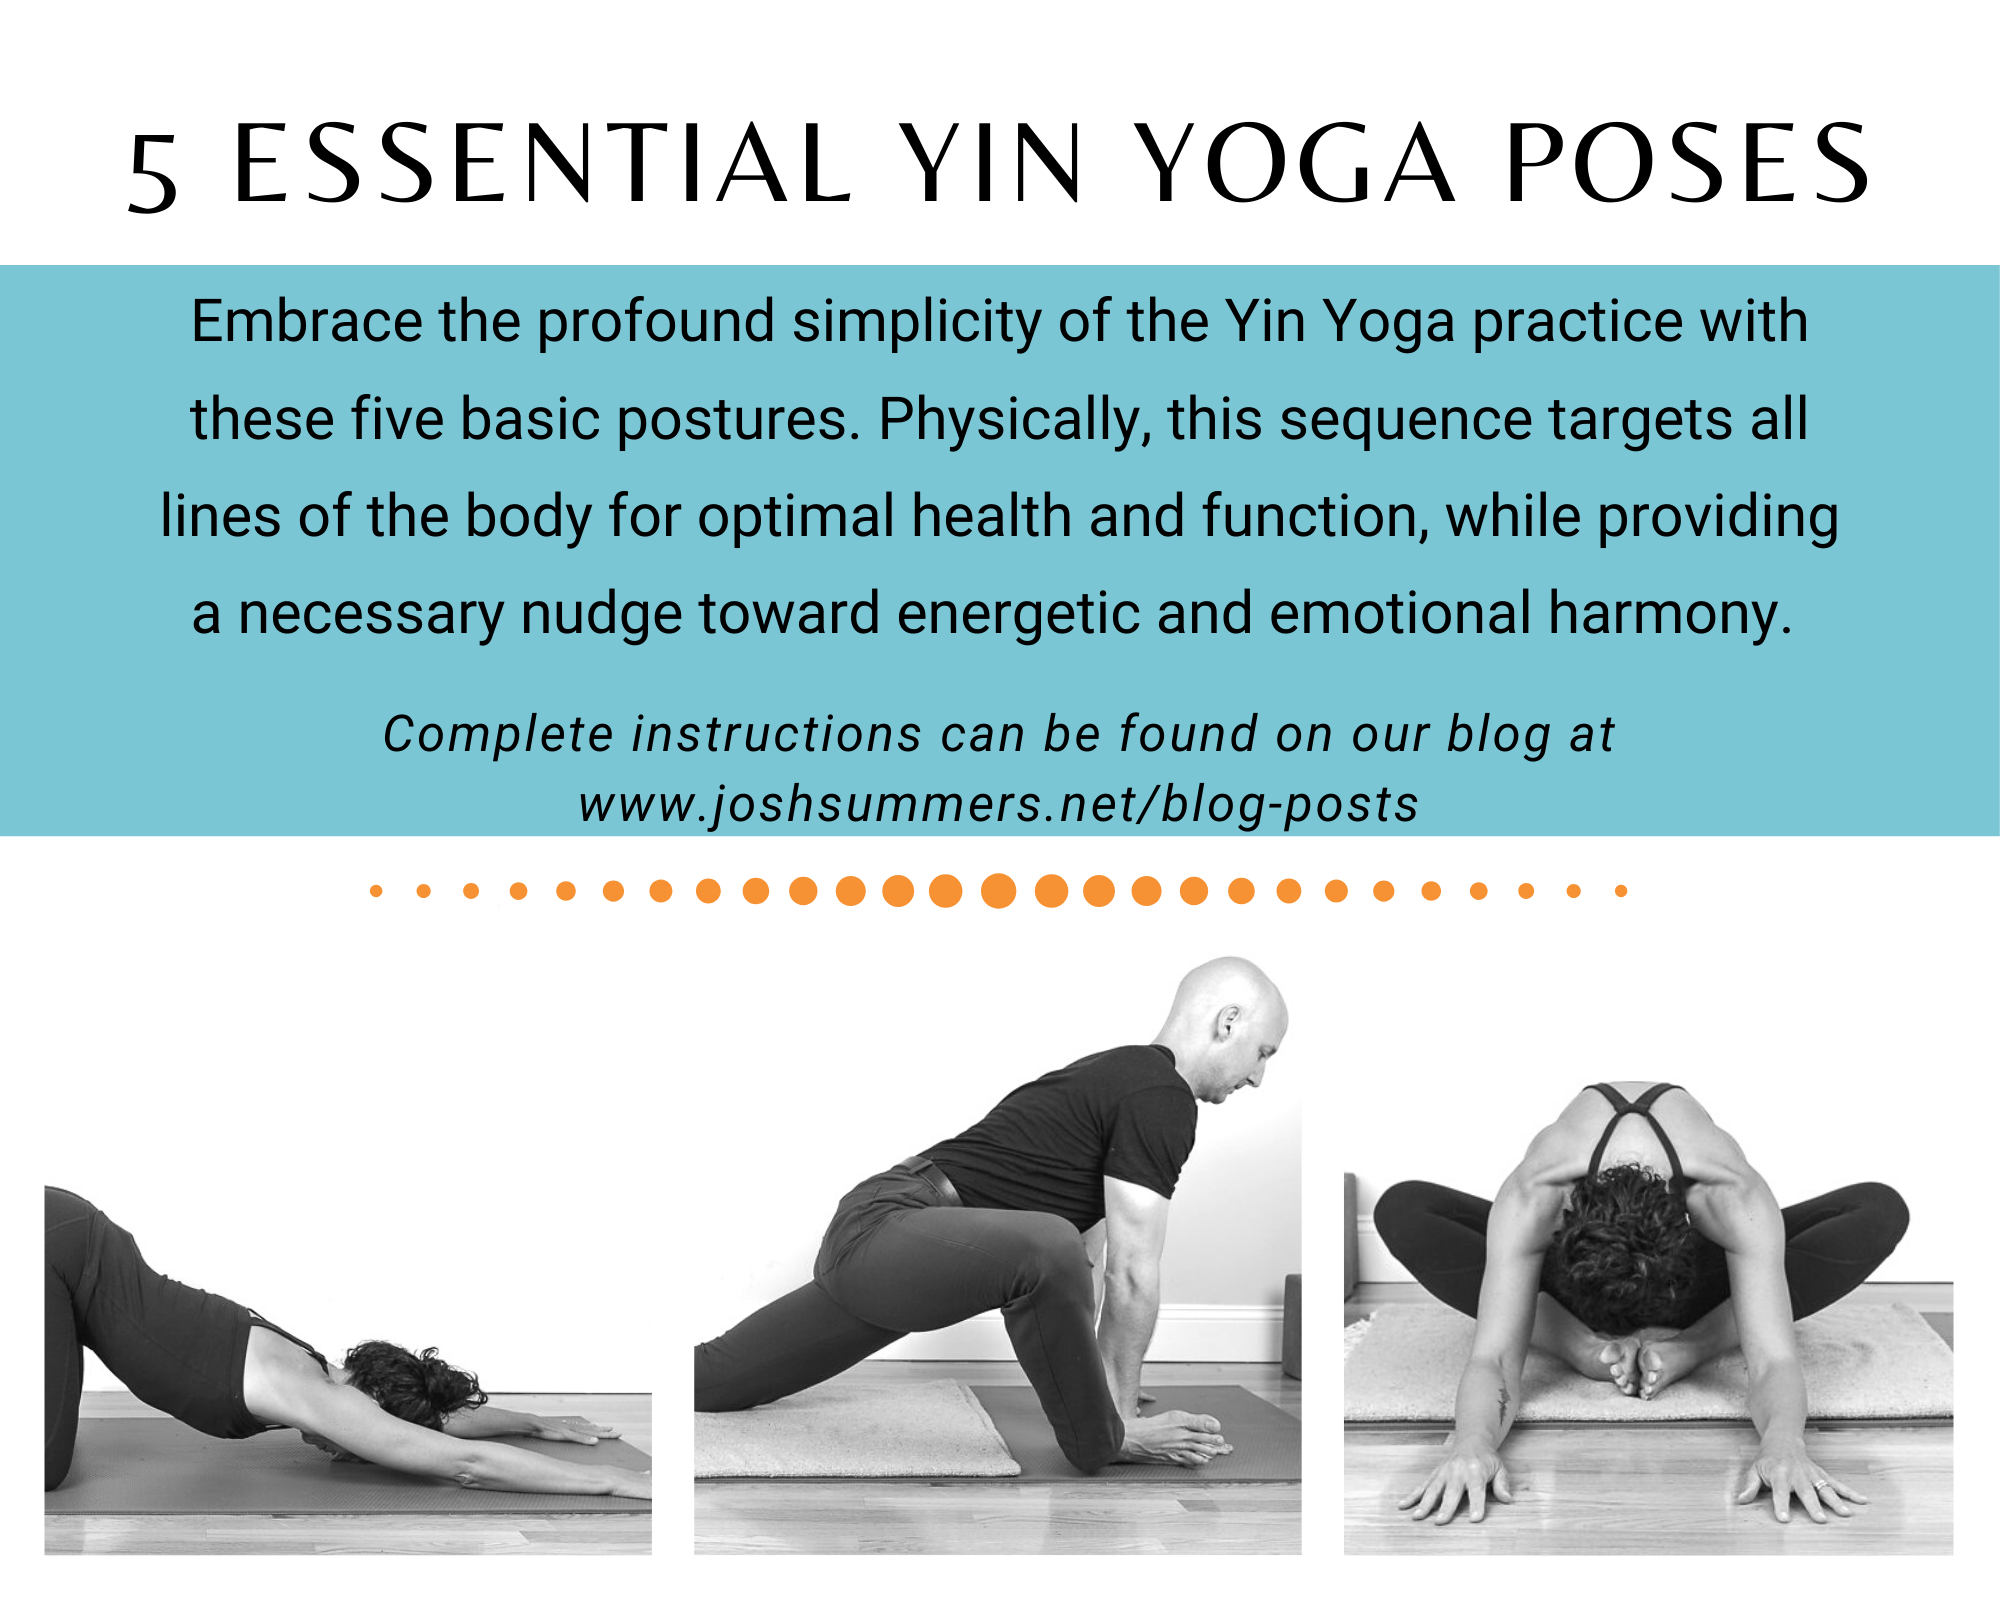 Yin Yoga Poses For Your Health - Yoga Poses 4 You